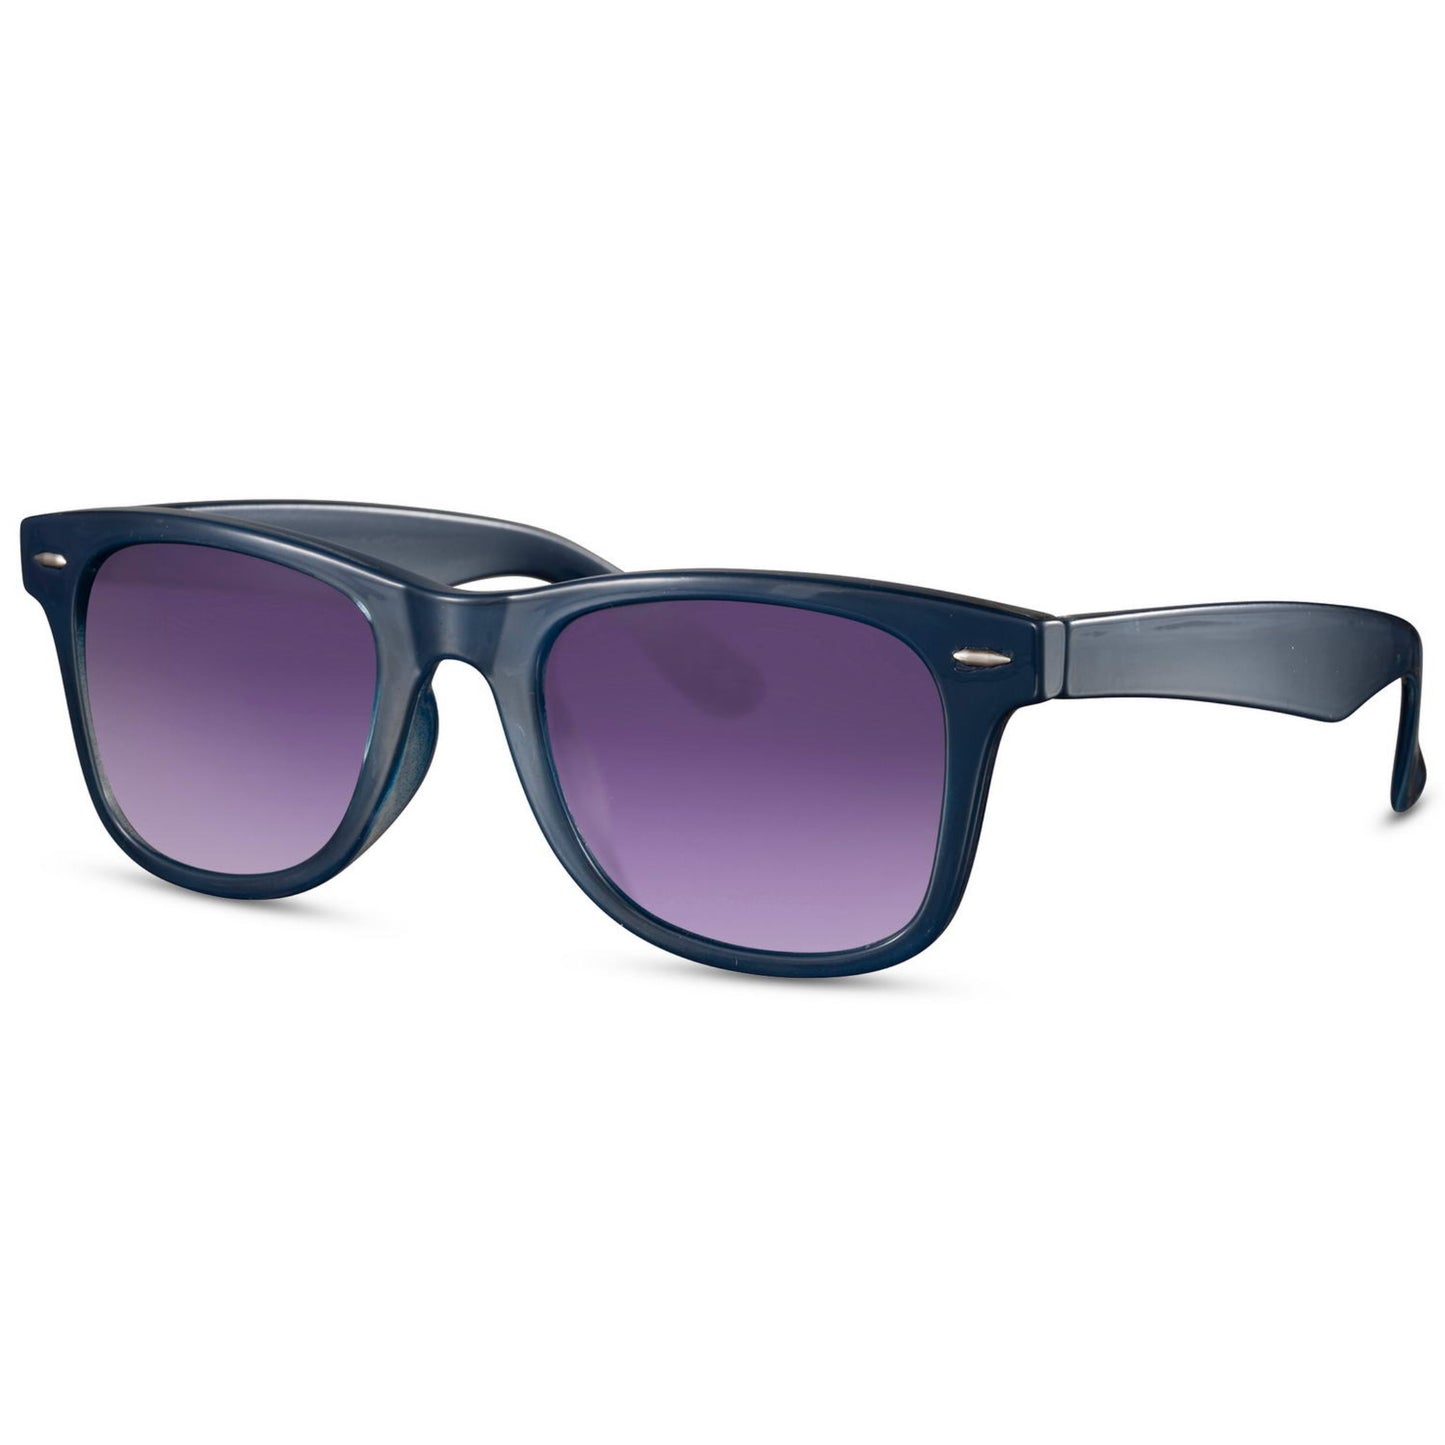 Nevada - Sunglasses - Exposure Sunglasses - NDL6186